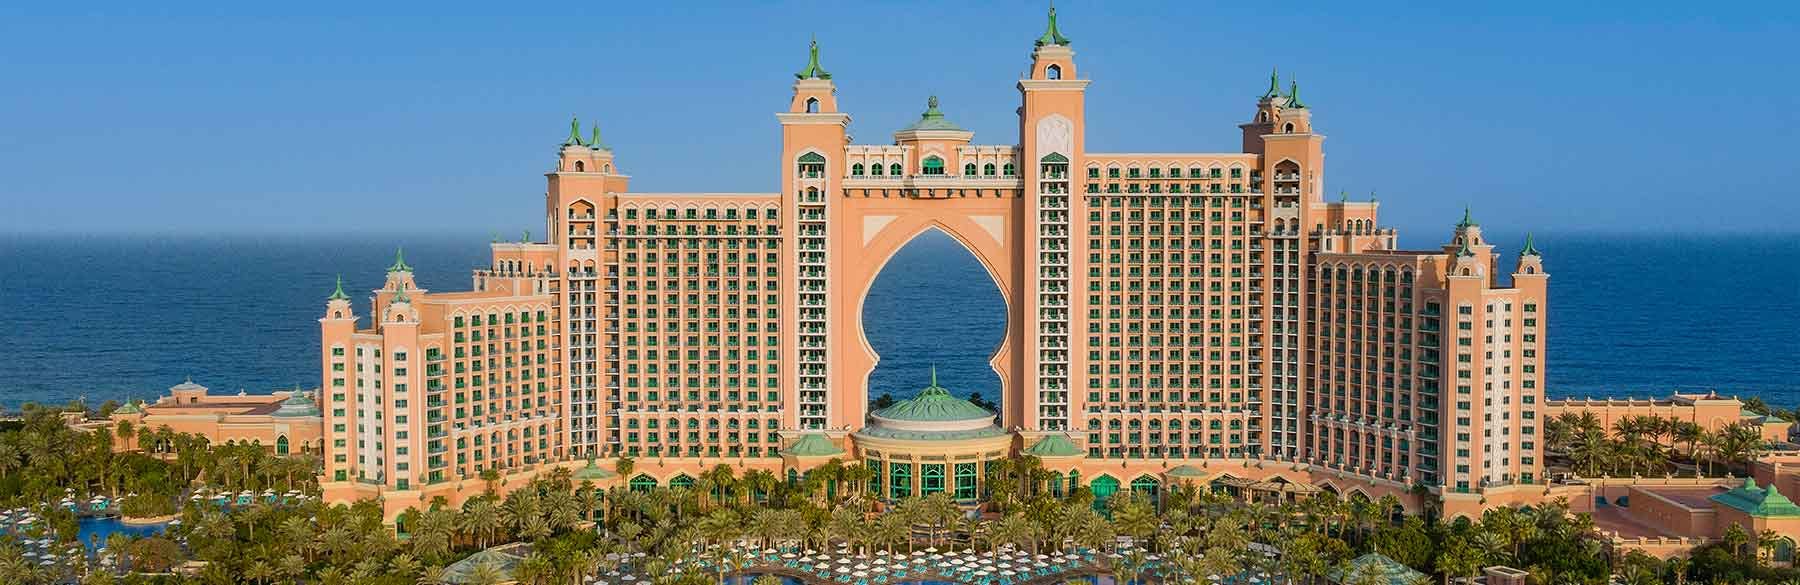 Atlantis, The Palm, Dubai